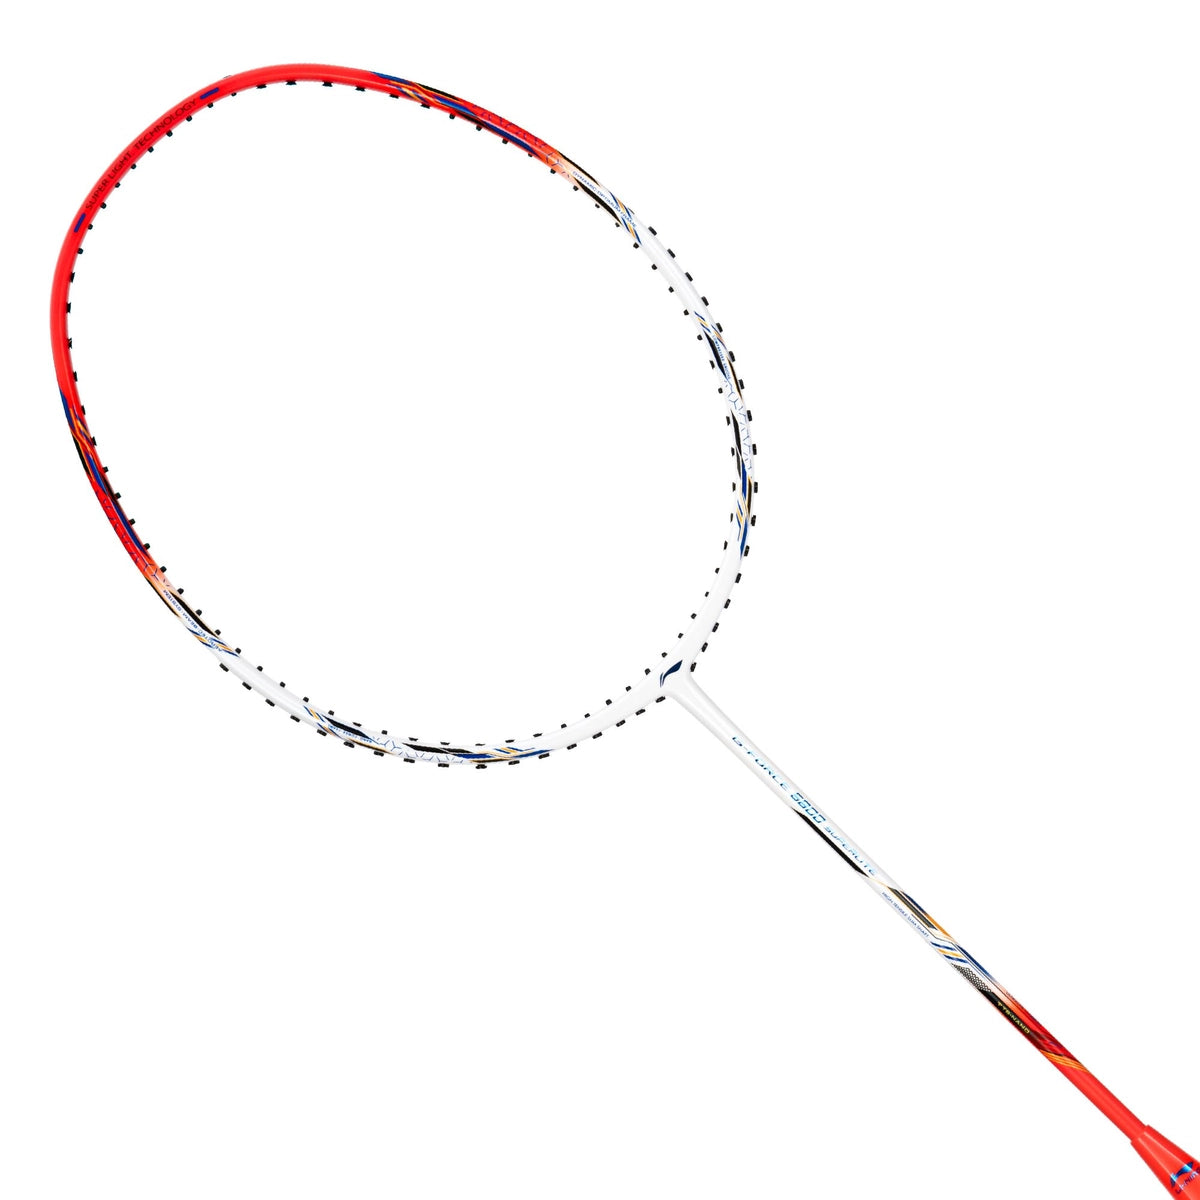 Li-Ning G-Force 5800 Superlite UnStrung Badminton Racquet